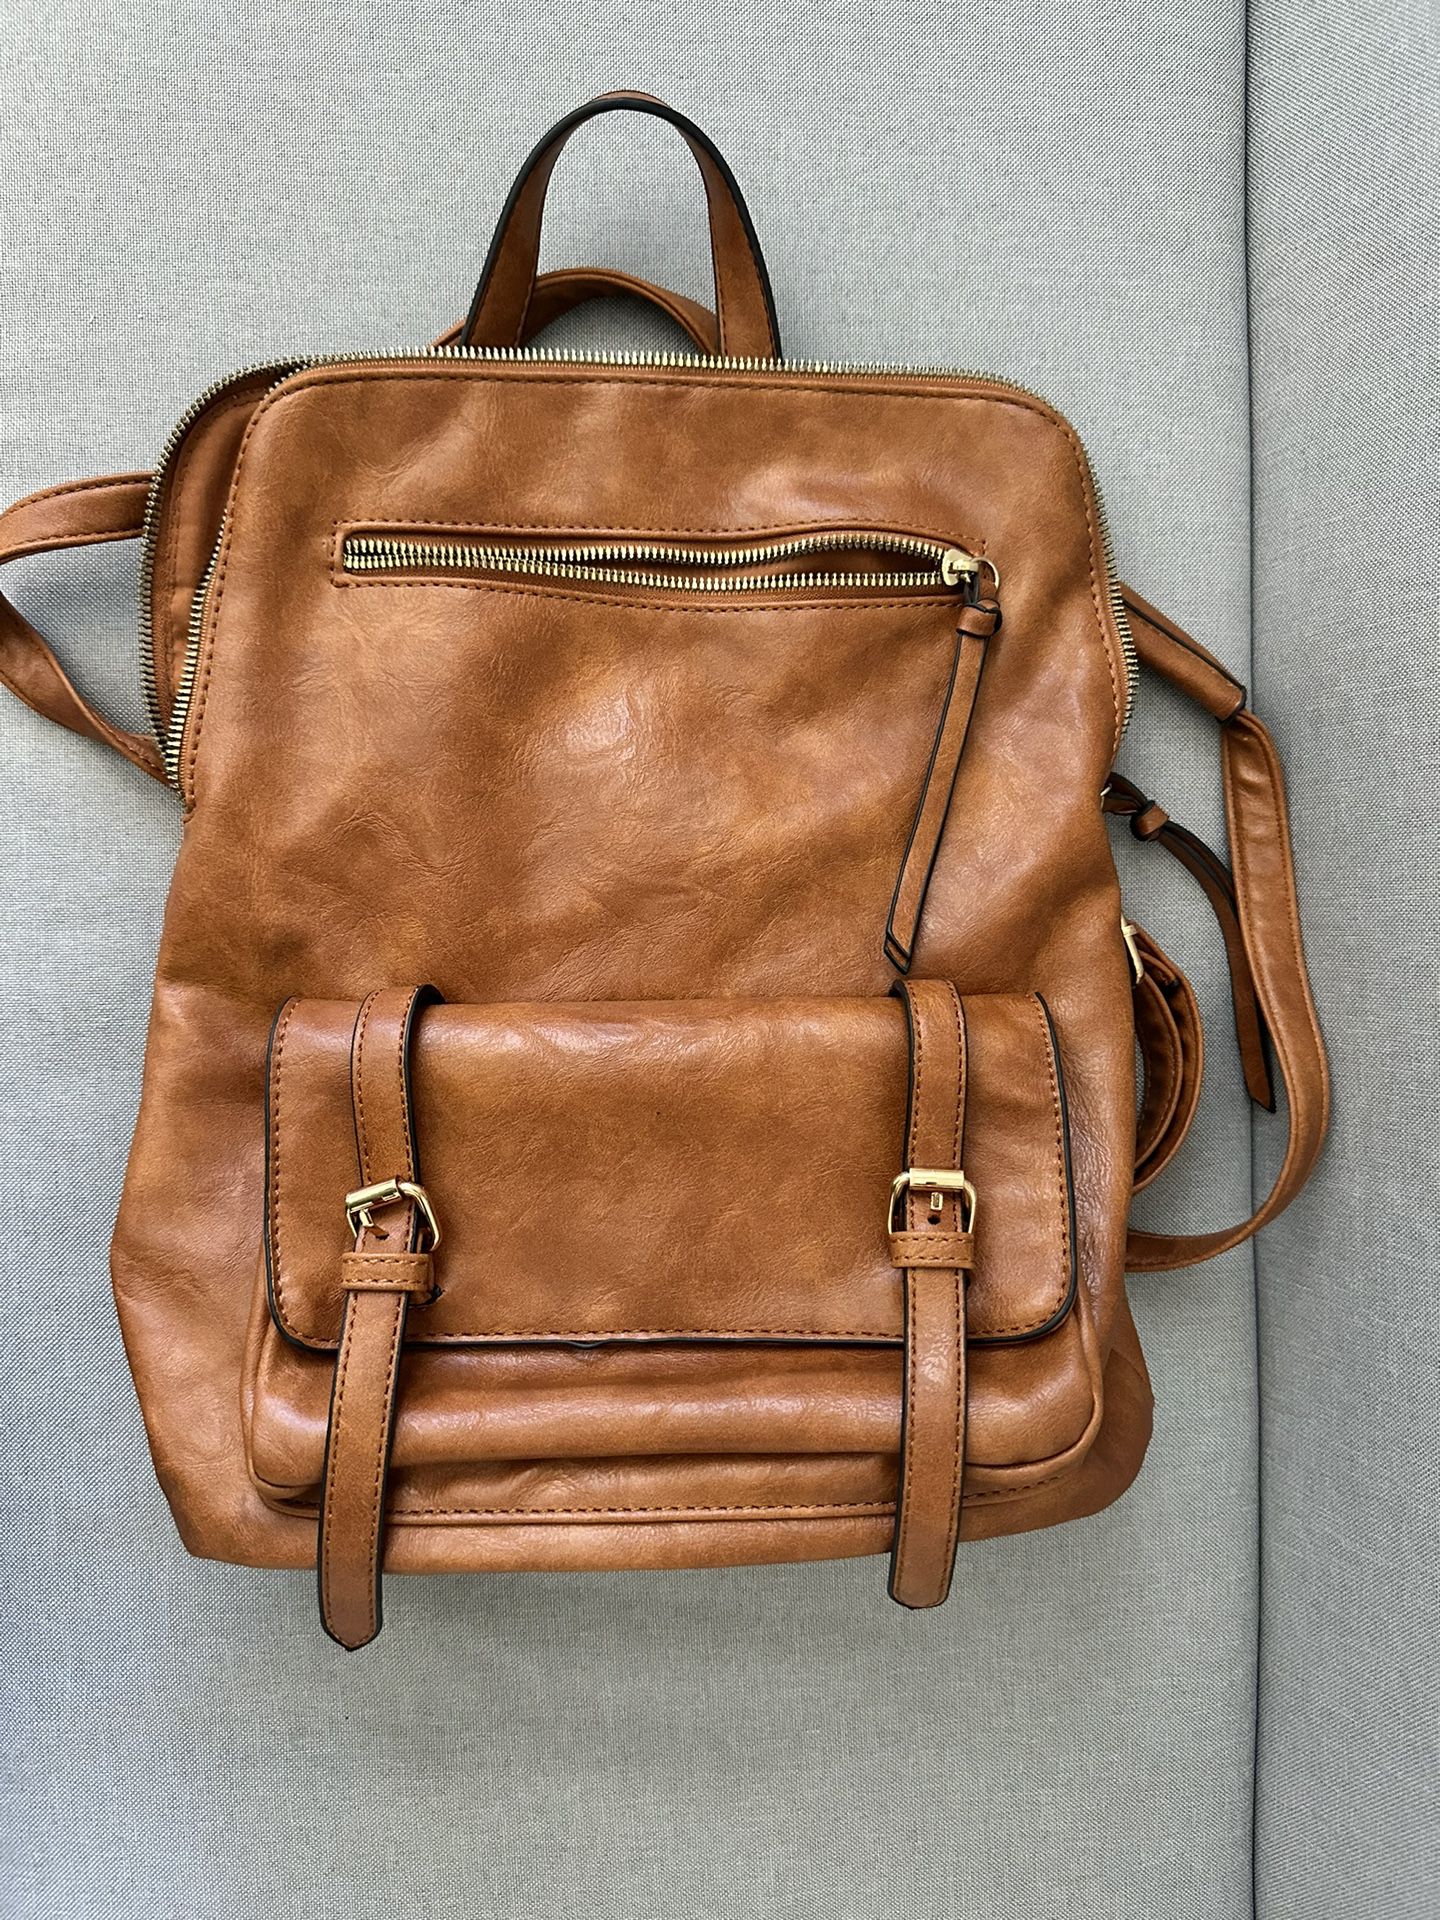 Leather Brown Bag